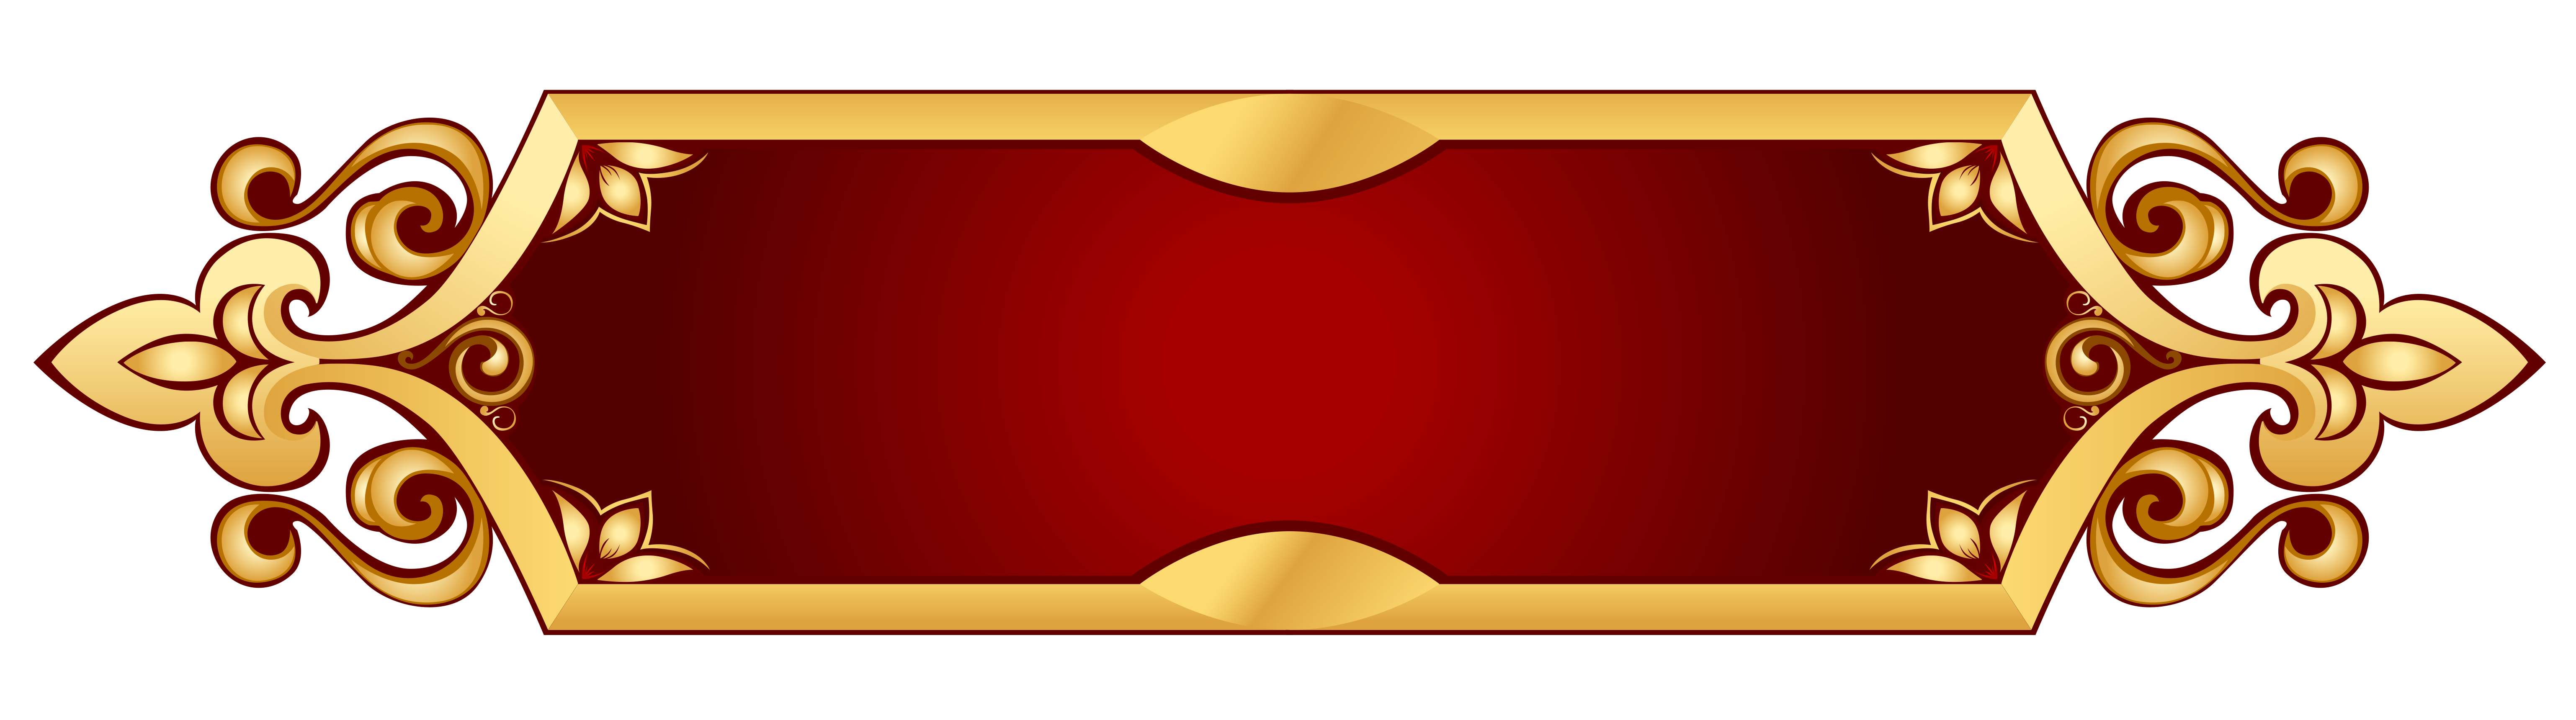 Banner PNG, Banner Transparent Background - FreeIconsPNG